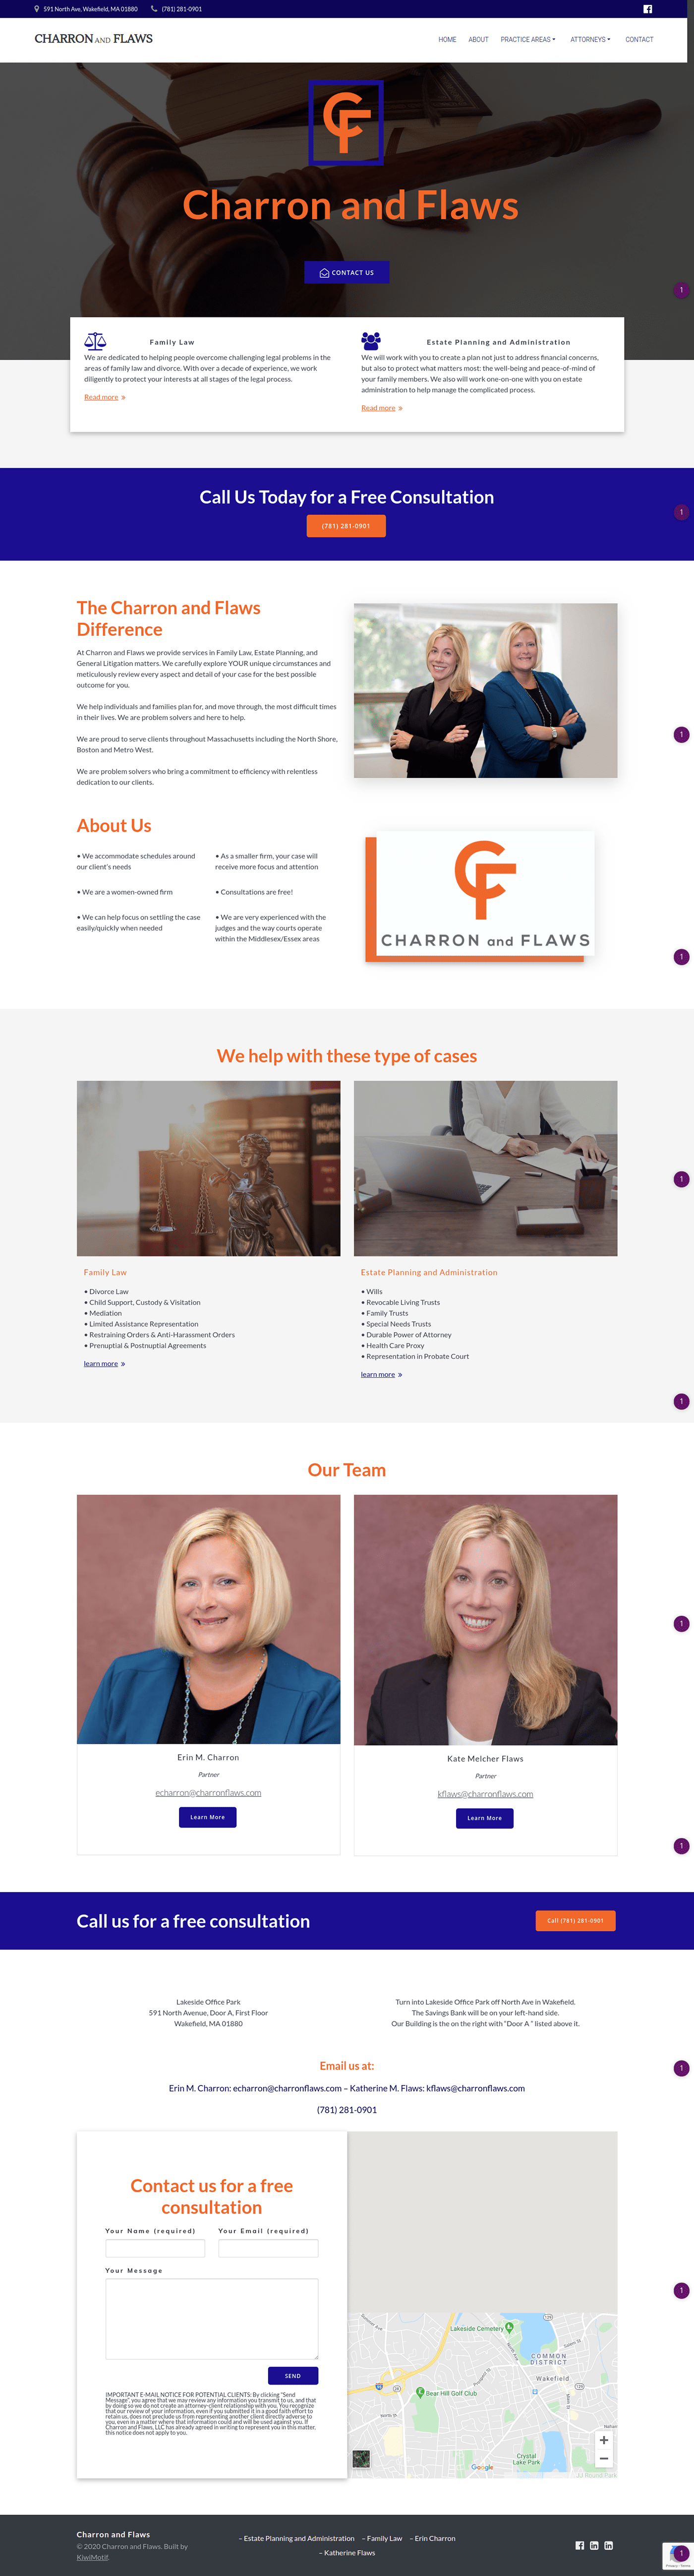 website designed by KiwiMotif